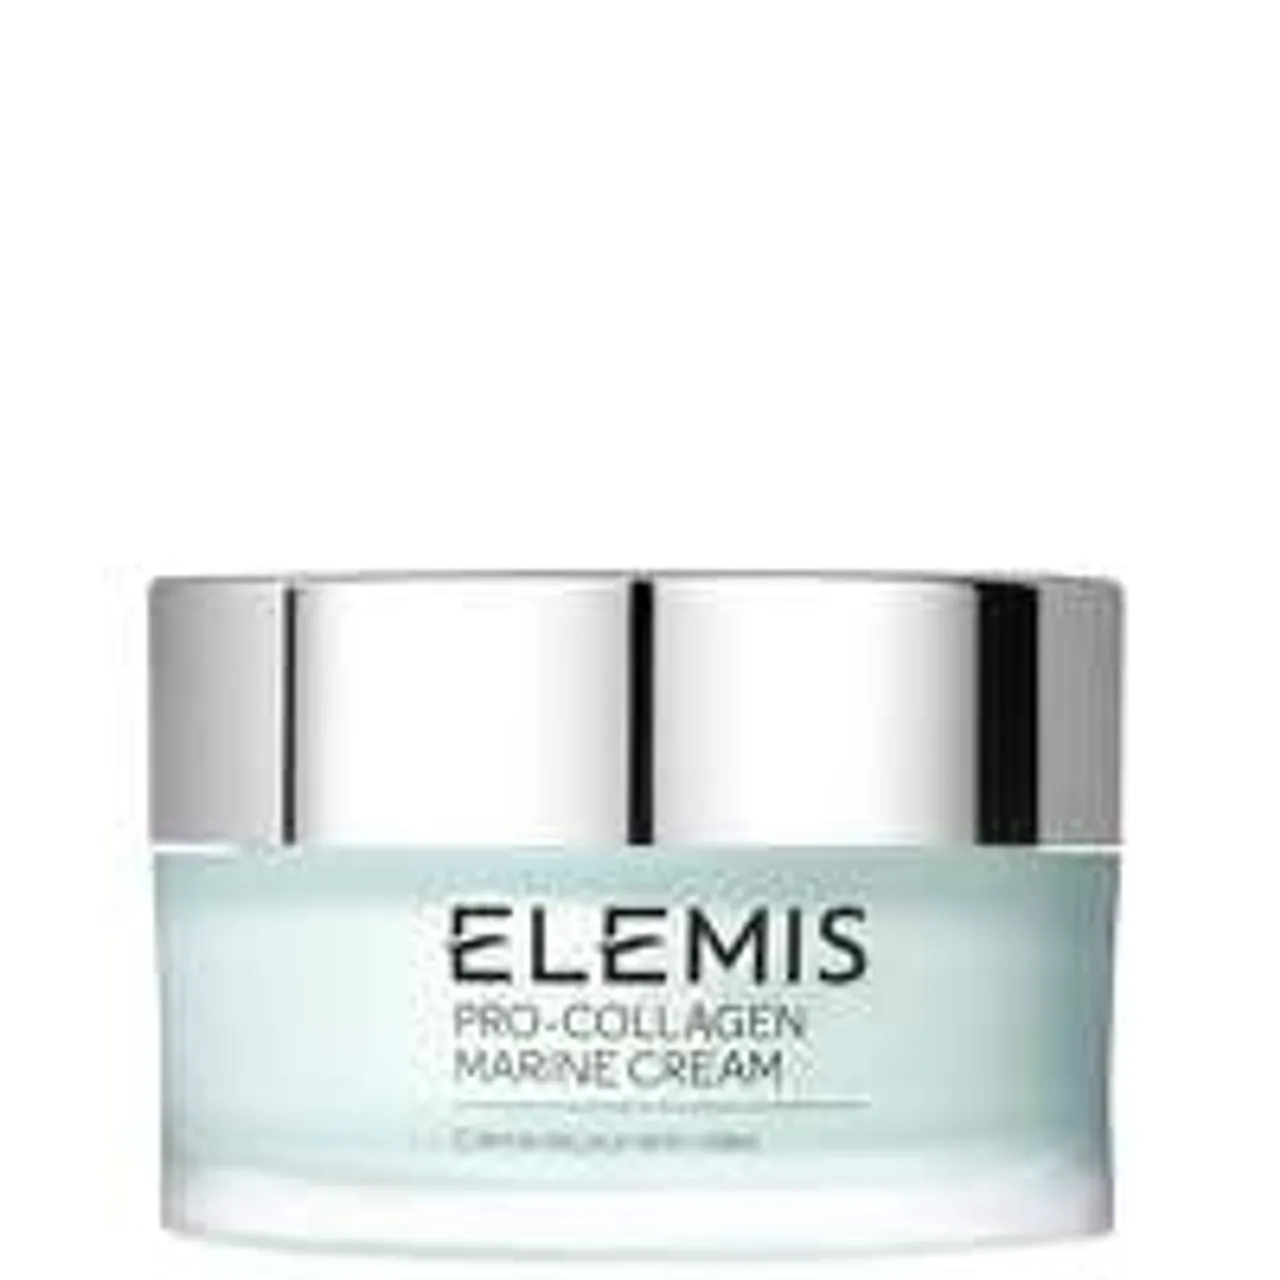 ELEMIS Pro-Collagen Marine Cream Anti-Wrinkle Hydrating Day Cream 50ml / 1.6 fl.oz.